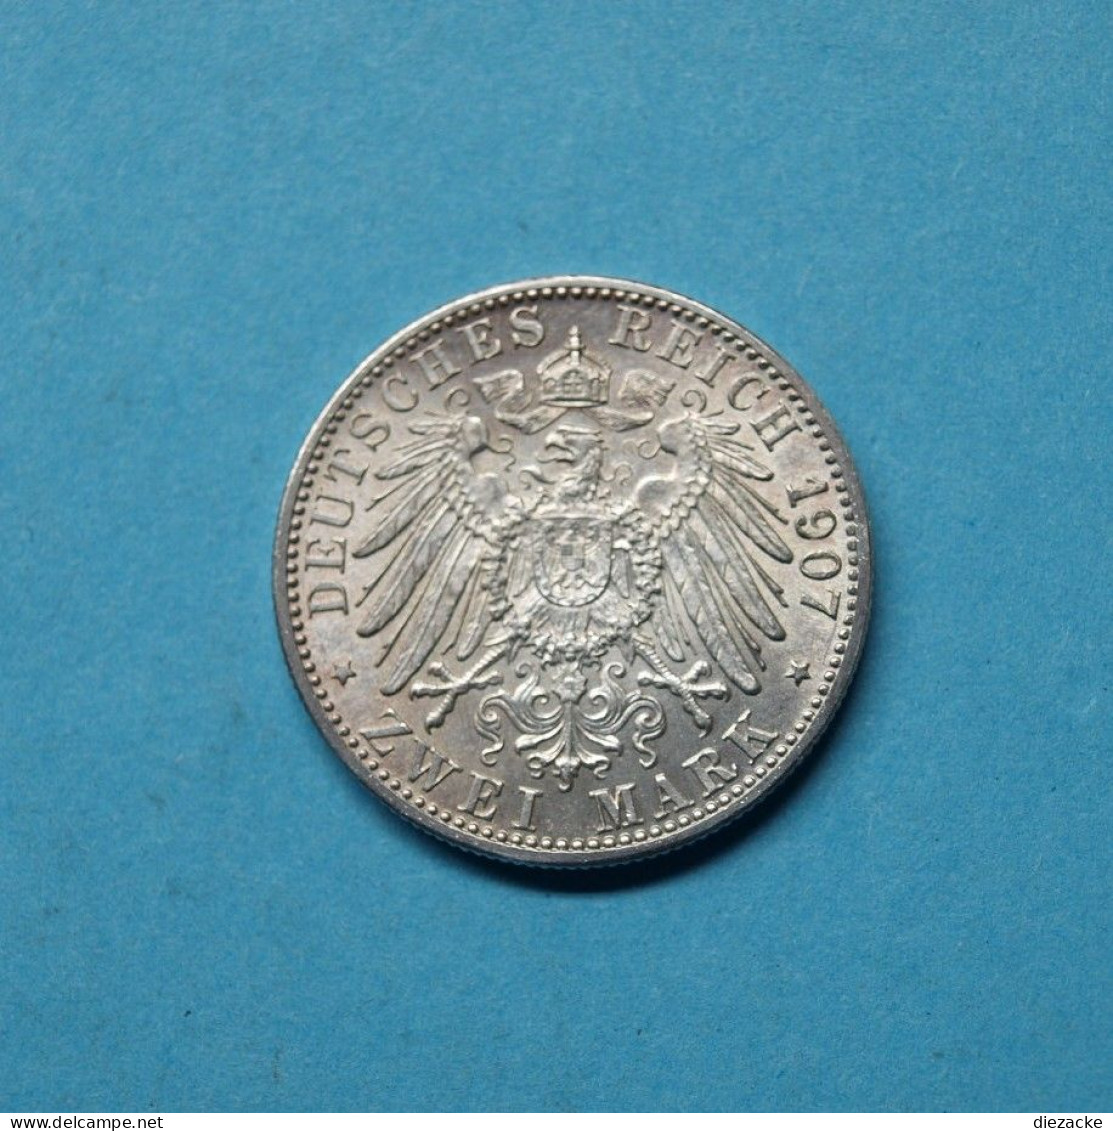 Baden 1907 2 Mark Friedrich I. ST (EM627 - 2, 3 & 5 Mark Plata